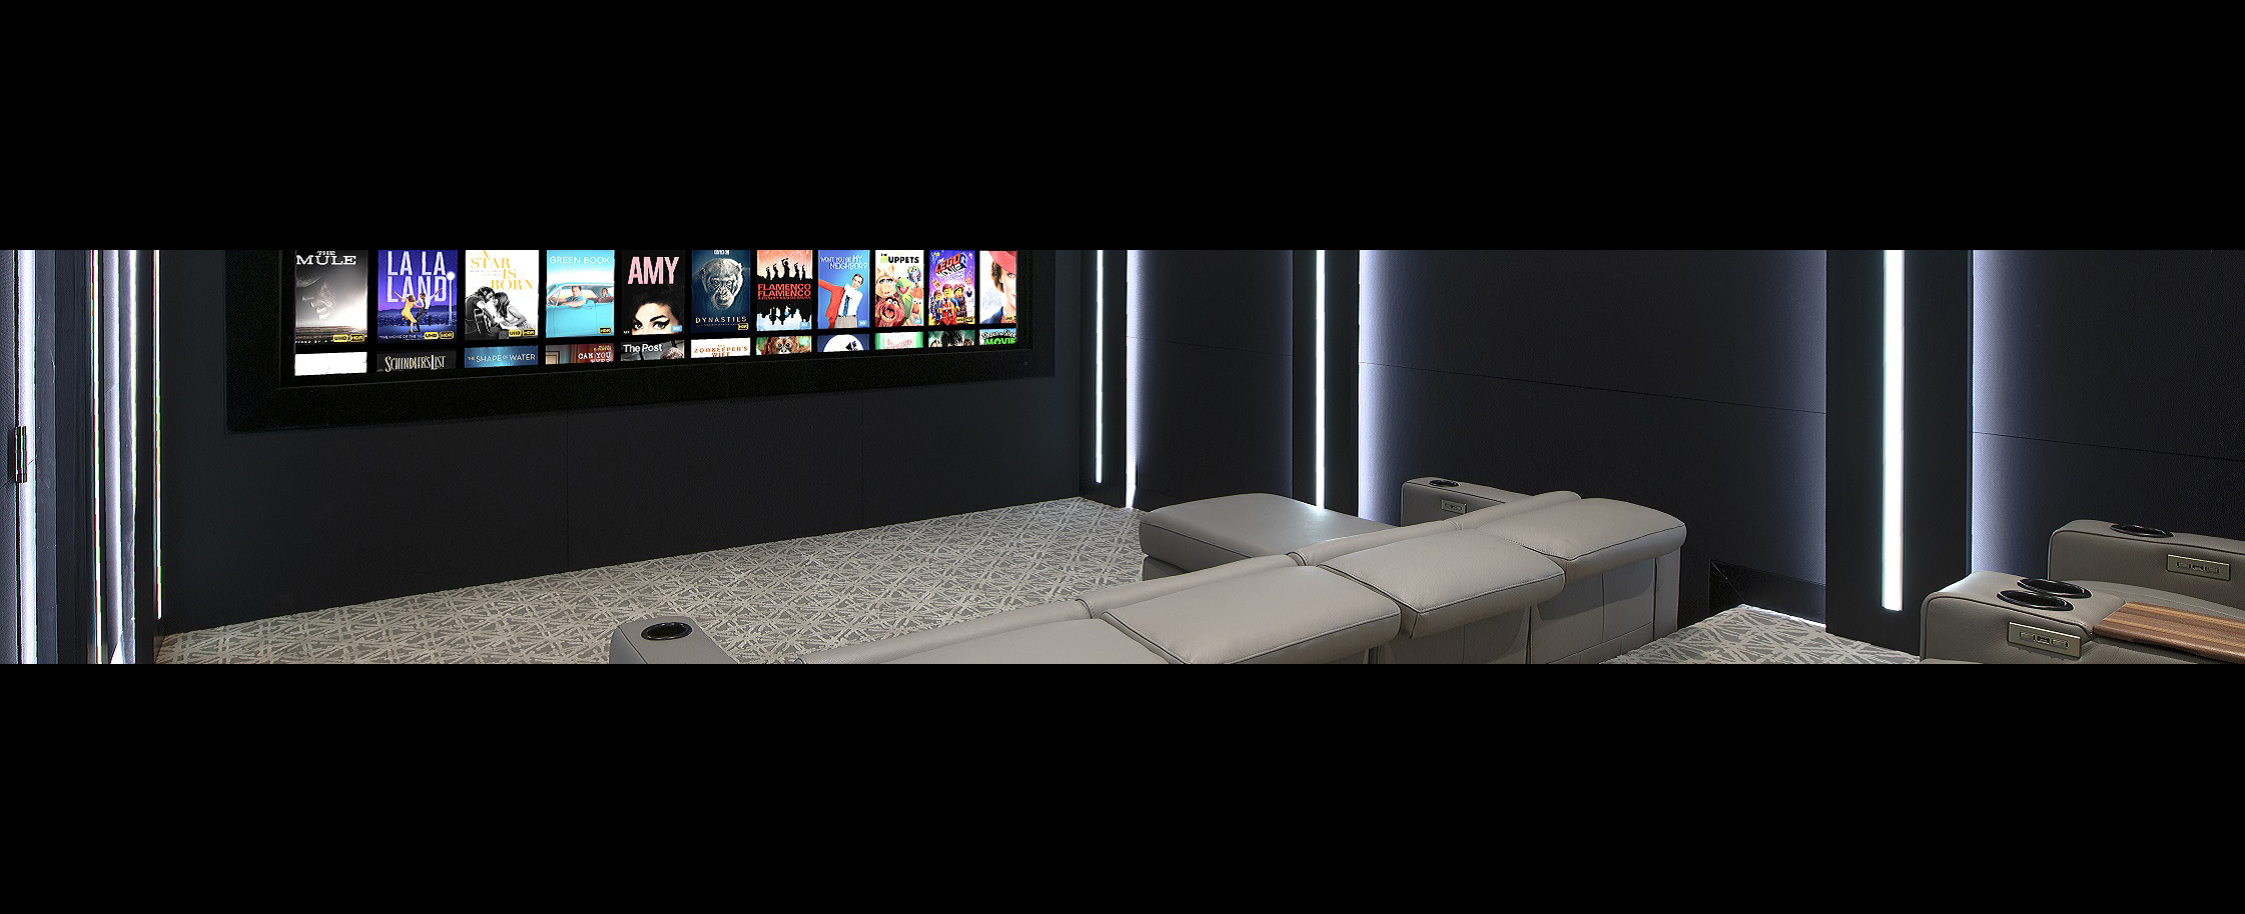 CinemaTech - Theater Interiors & Acoustics